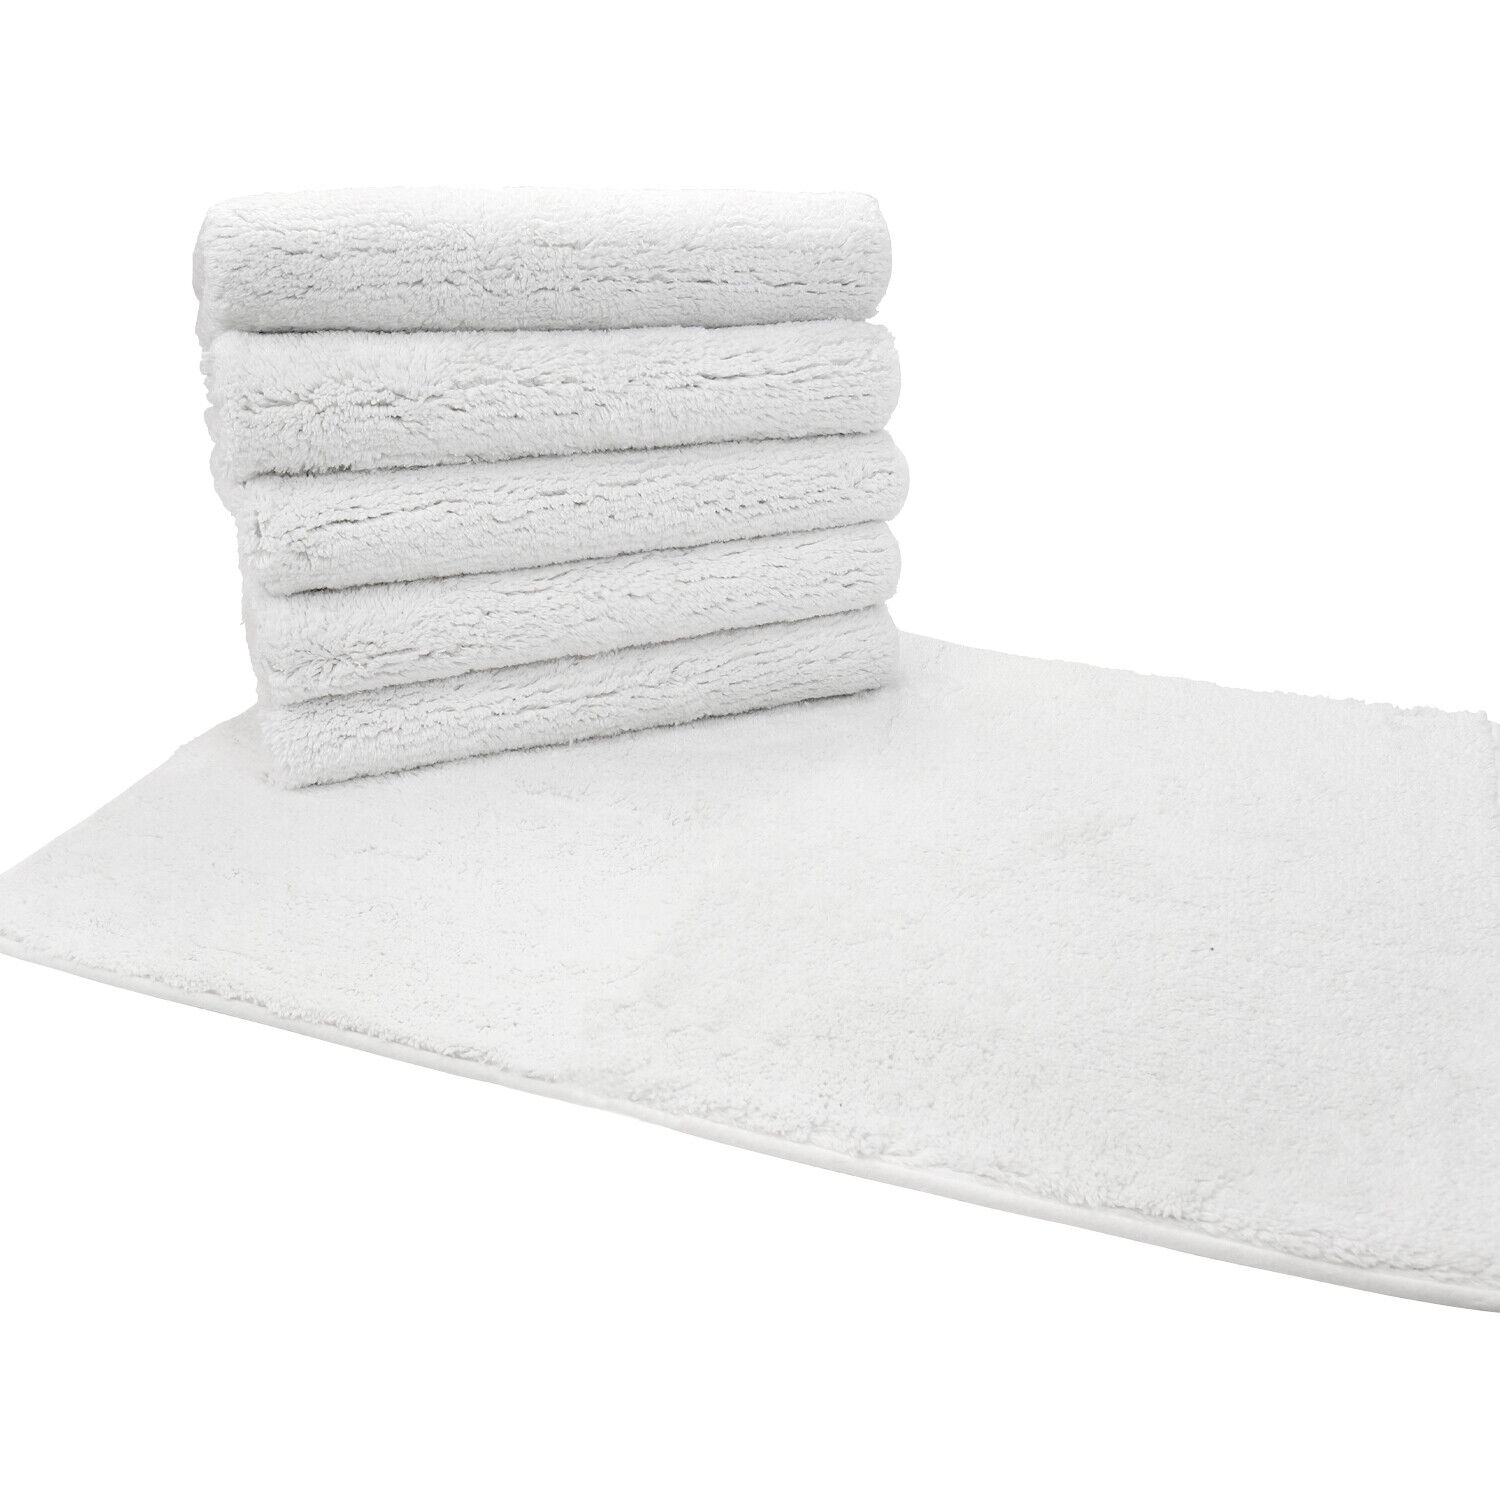 Bulk 6-Pack of Bath Mat Rugs - 20 x 30 White Cotton Bathroom Floor Non-Slip Arkwright Does Not Apply